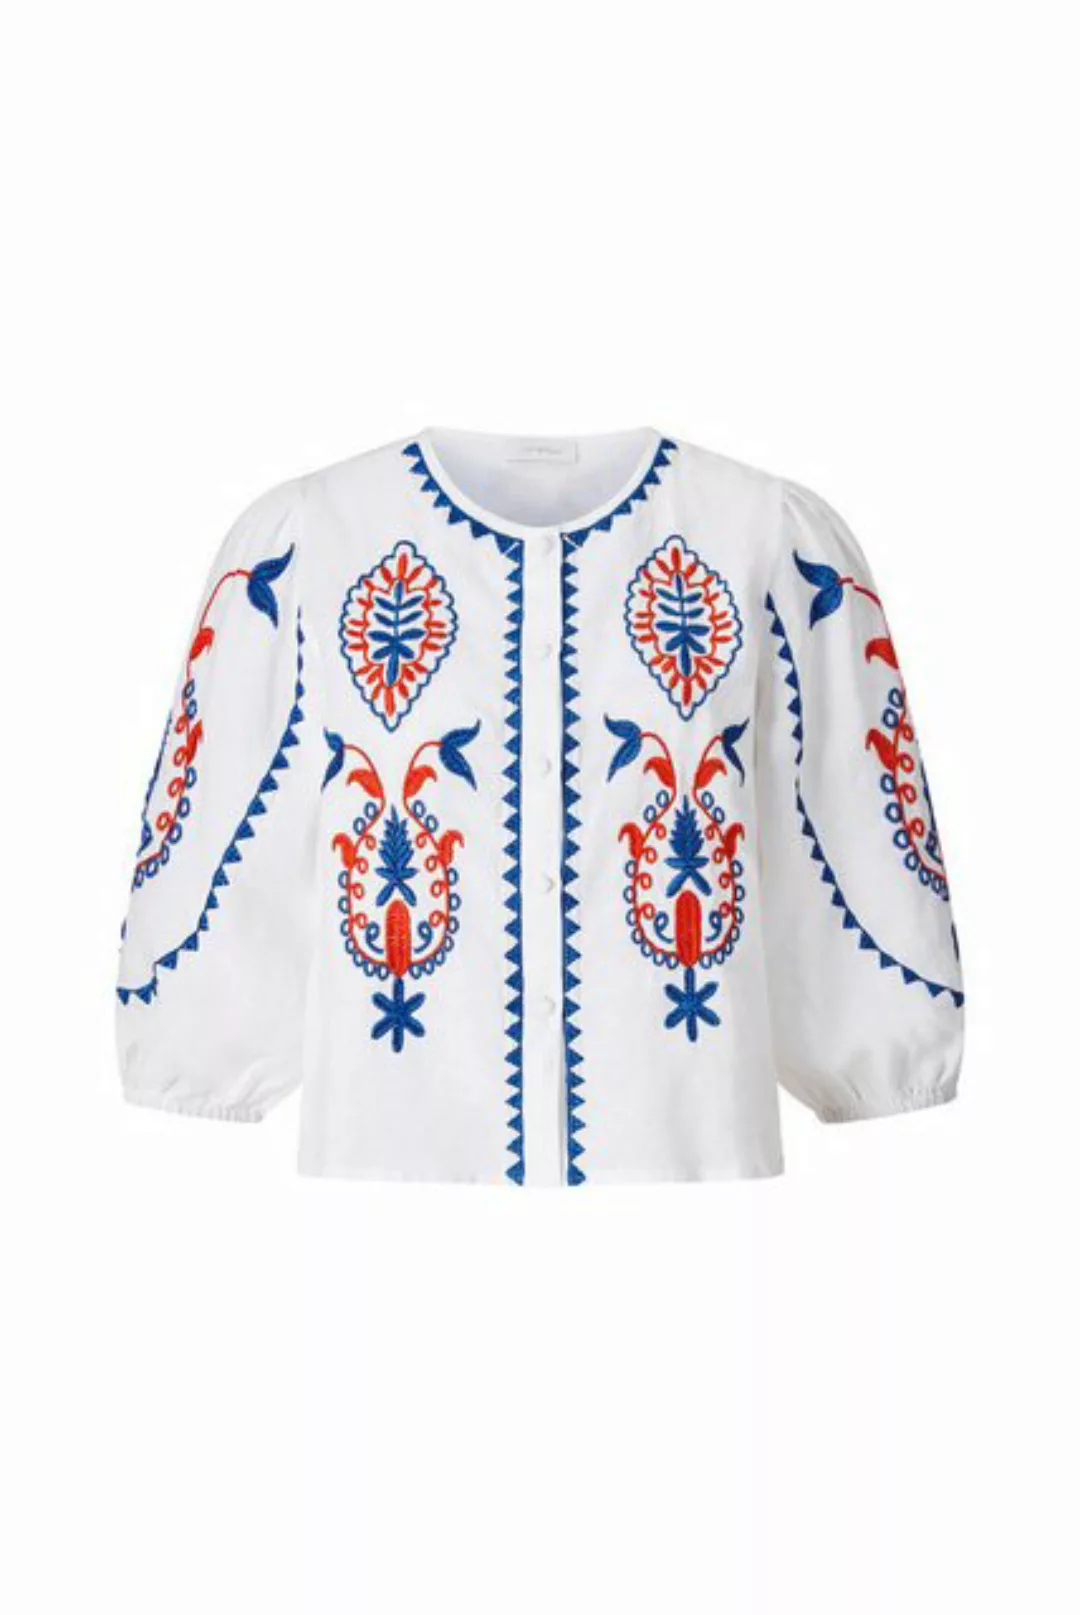 Rich & Royal Blusenshirt embroidery blouse, azzure blue günstig online kaufen